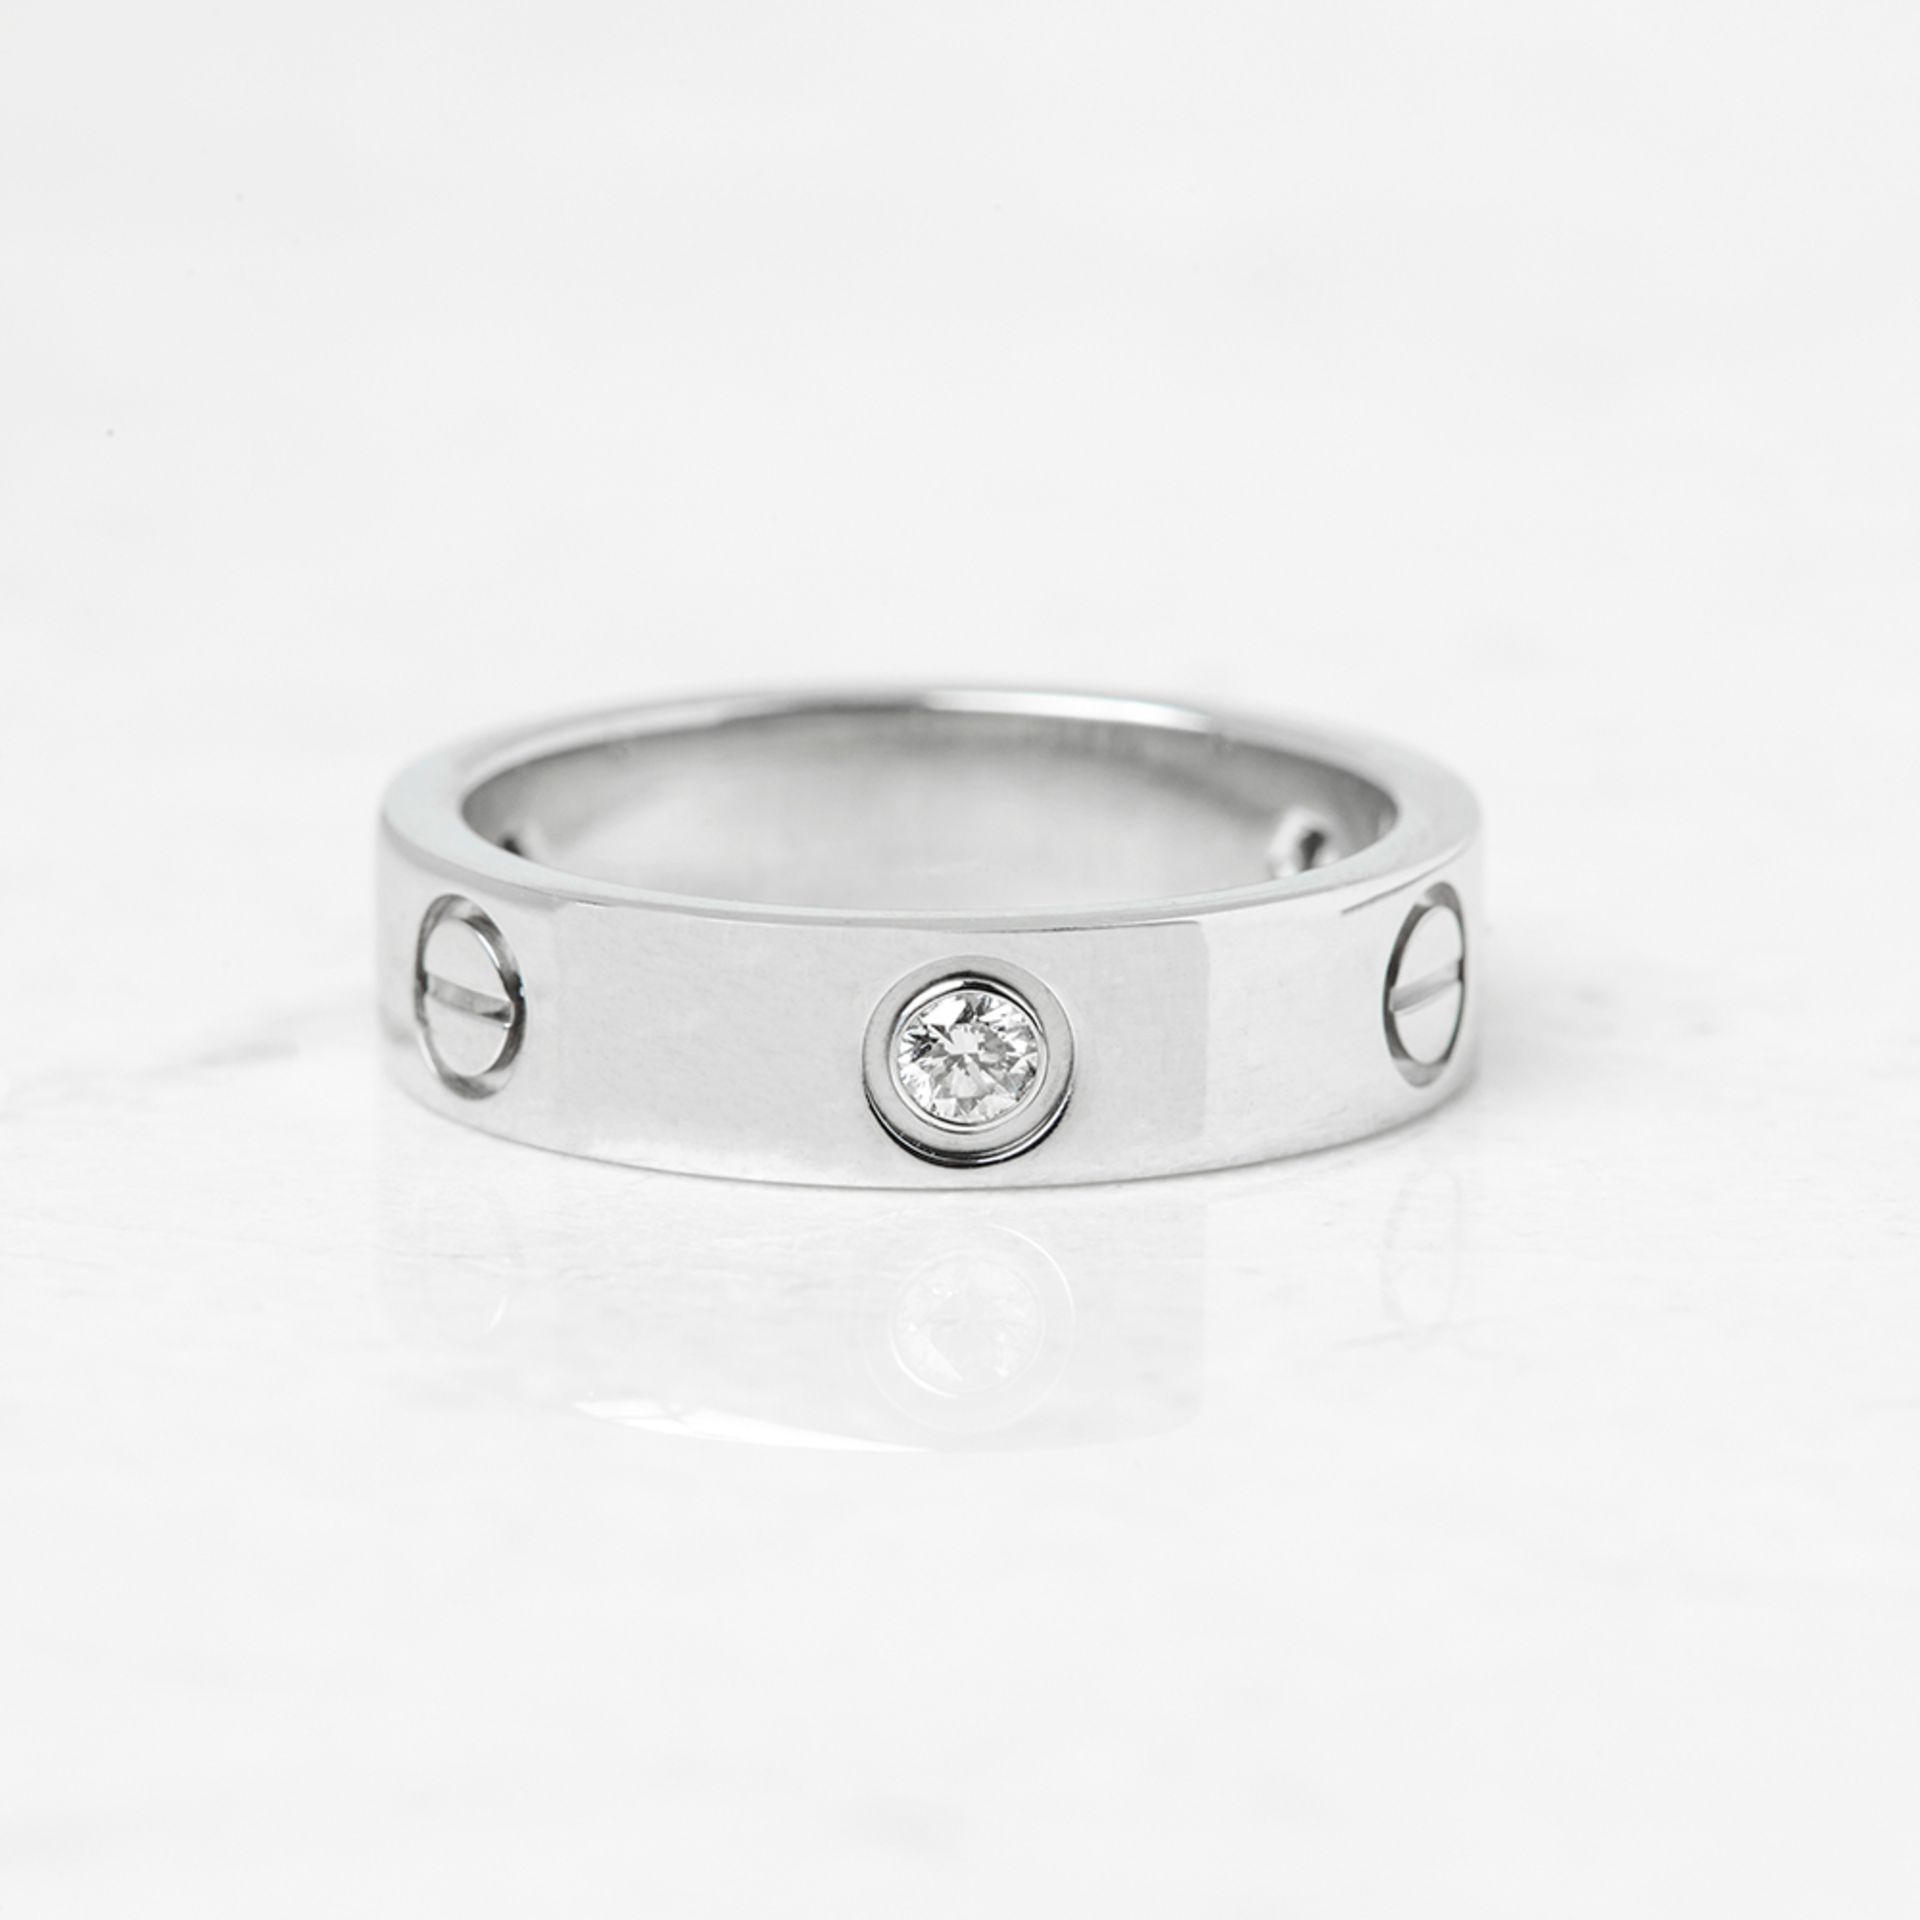 Cartier 18k White Gold 3 Diamond Love Ring - Image 2 of 6